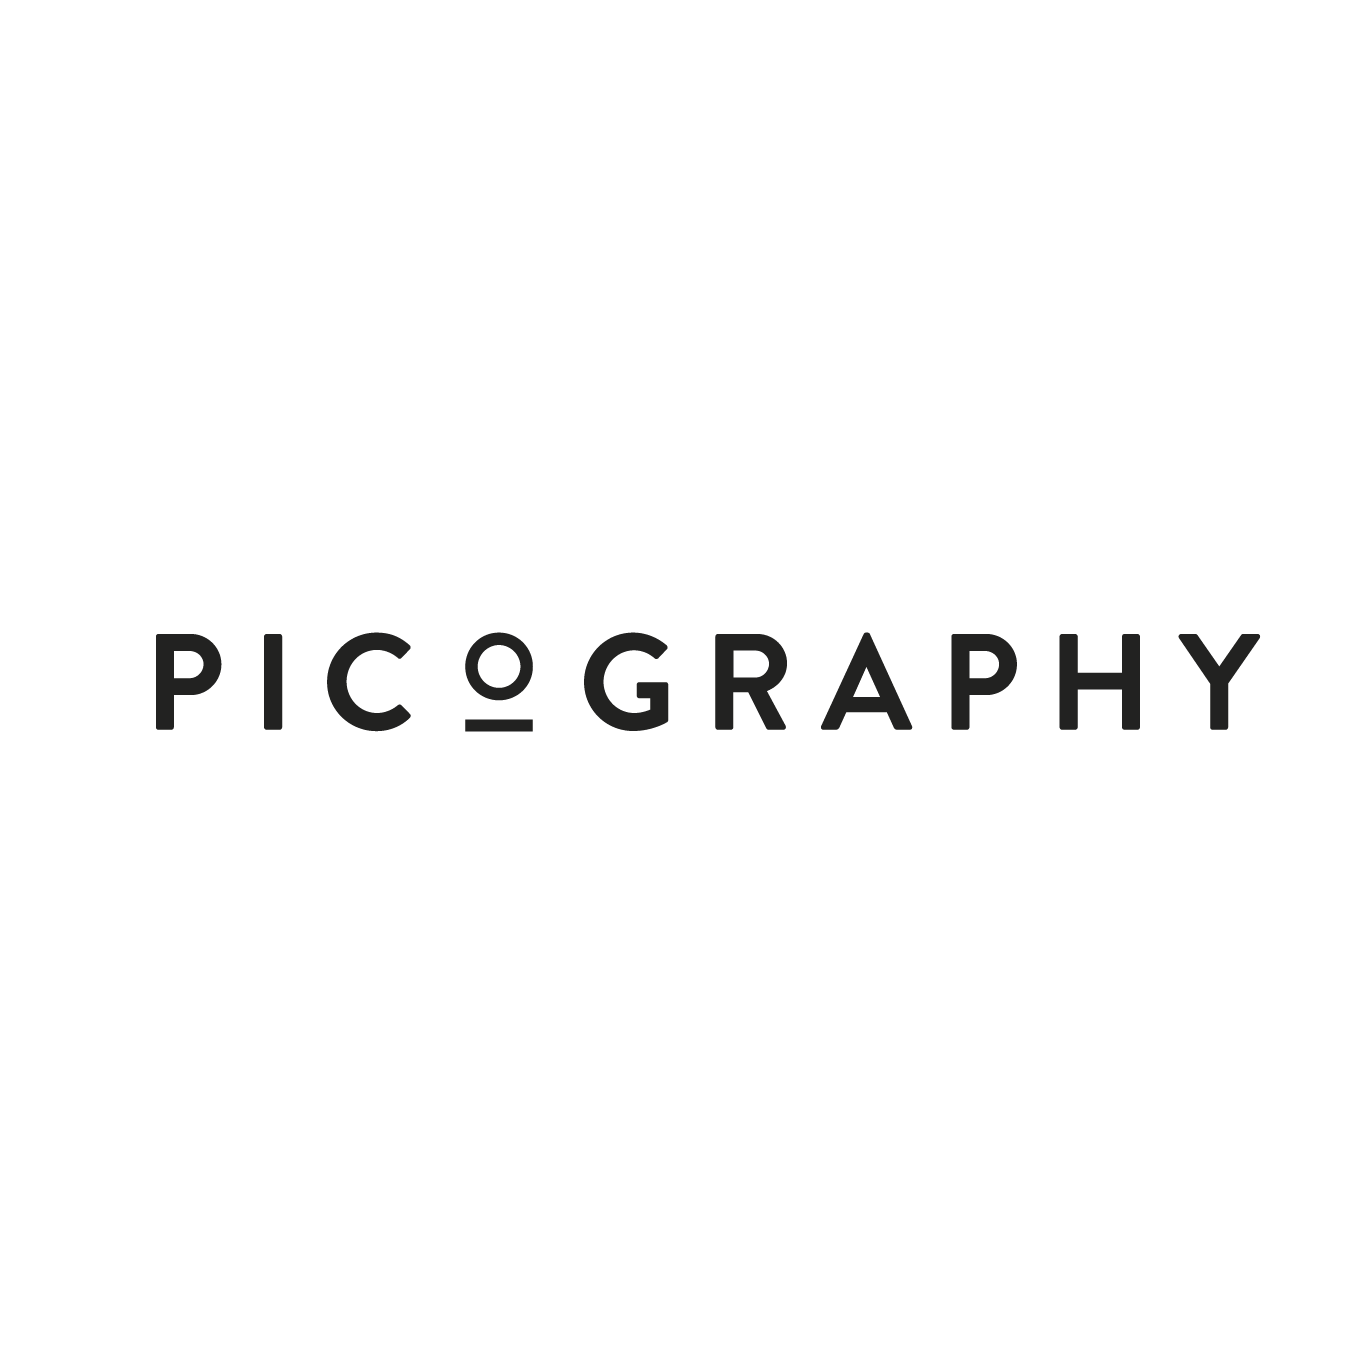 Picography logo